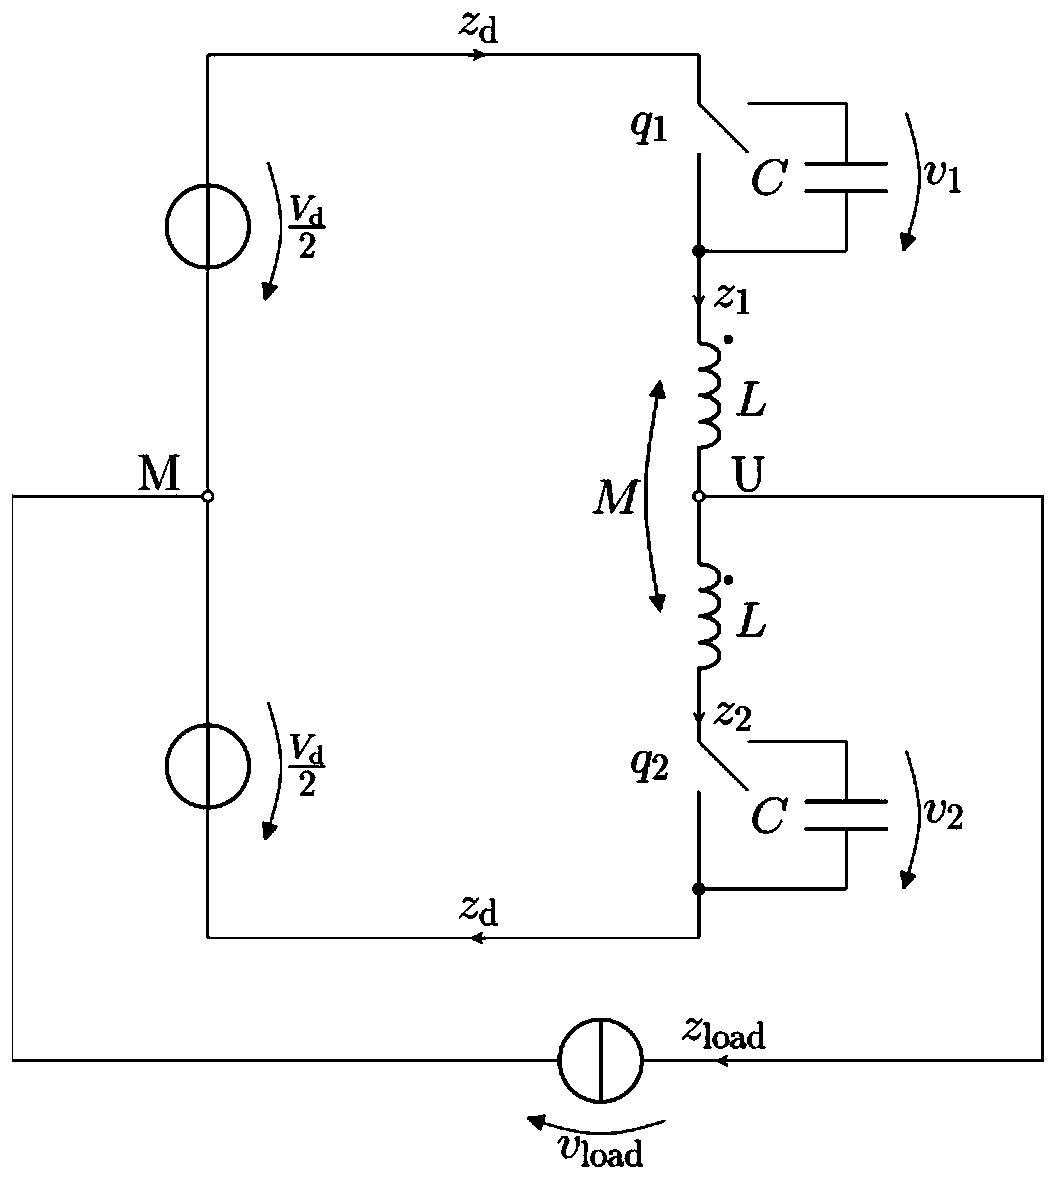 Modeling control method of modular multilevel converter based on singular perturbation